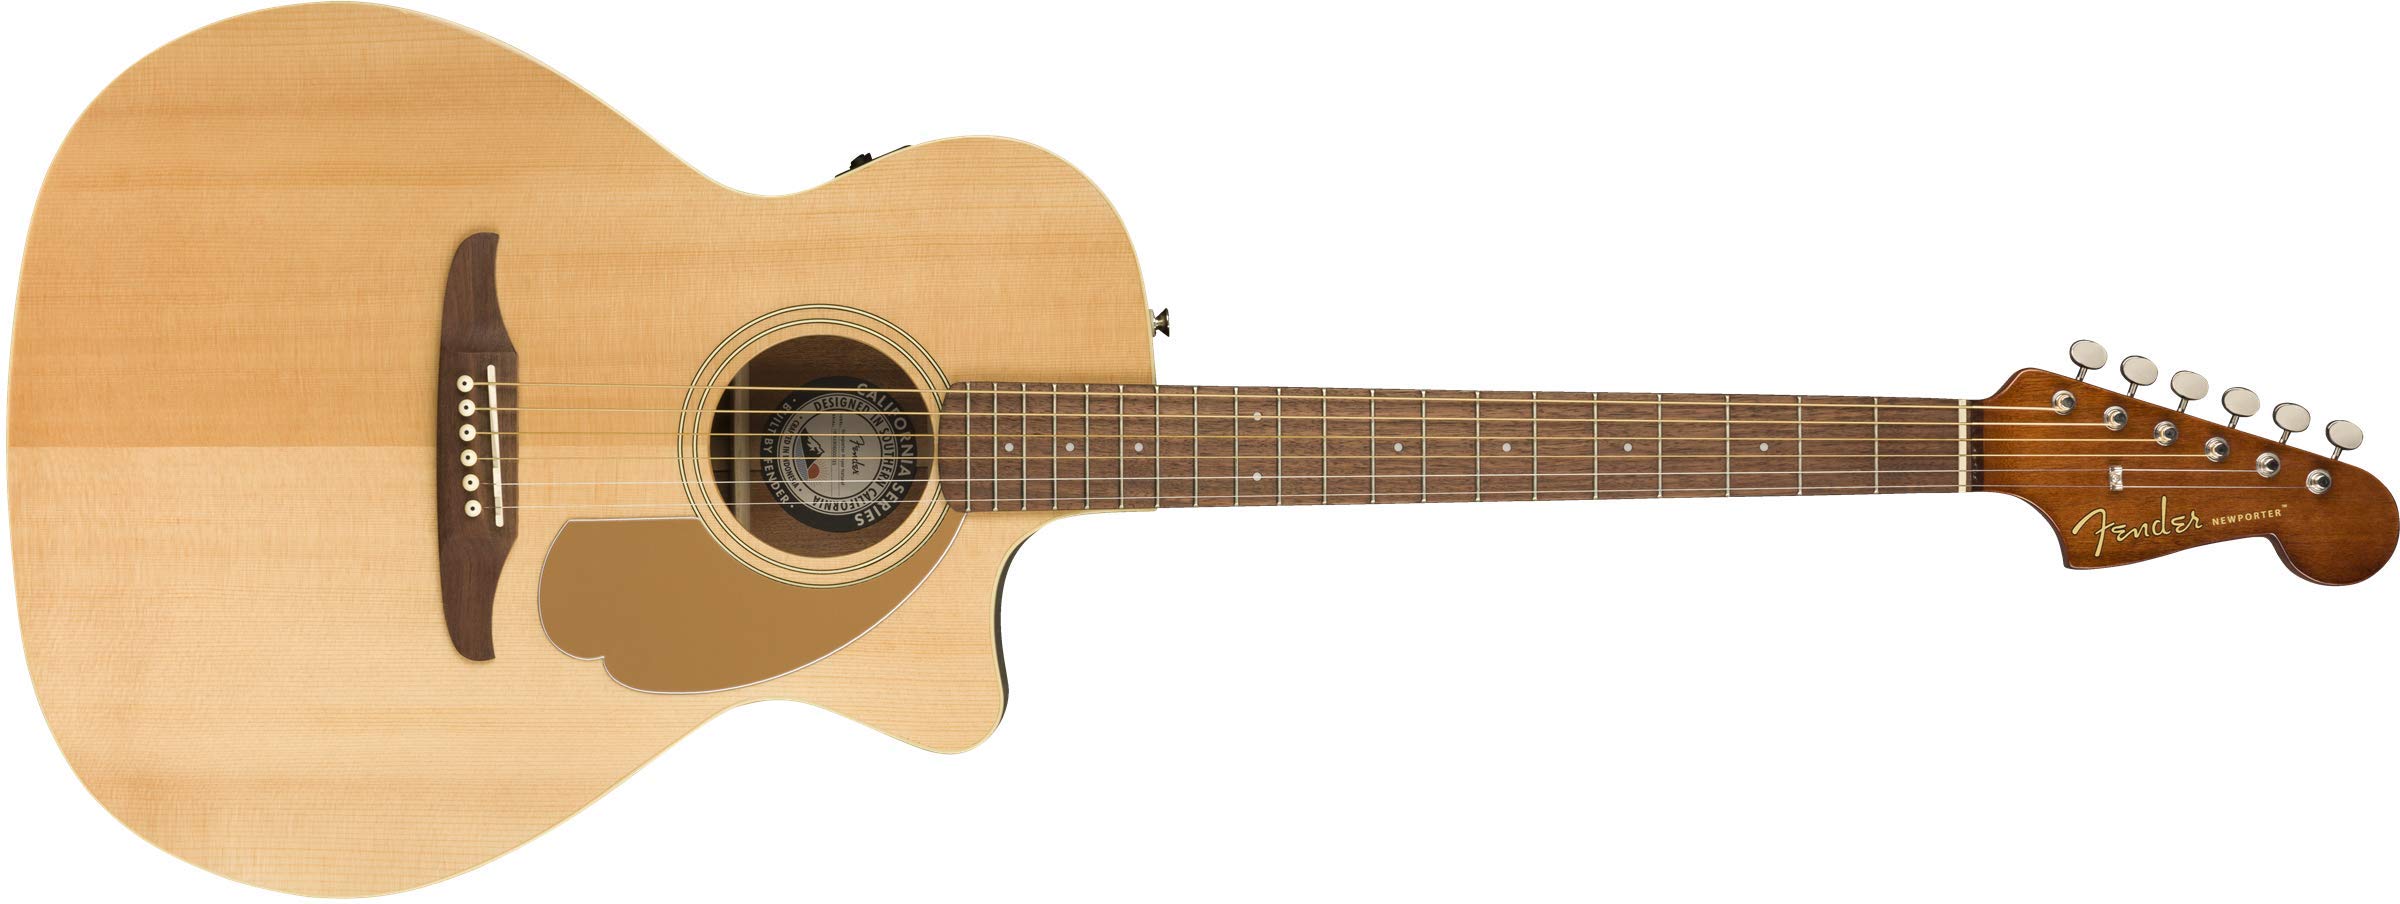 Fender Акустическая гитара Newporter Player - натуральная